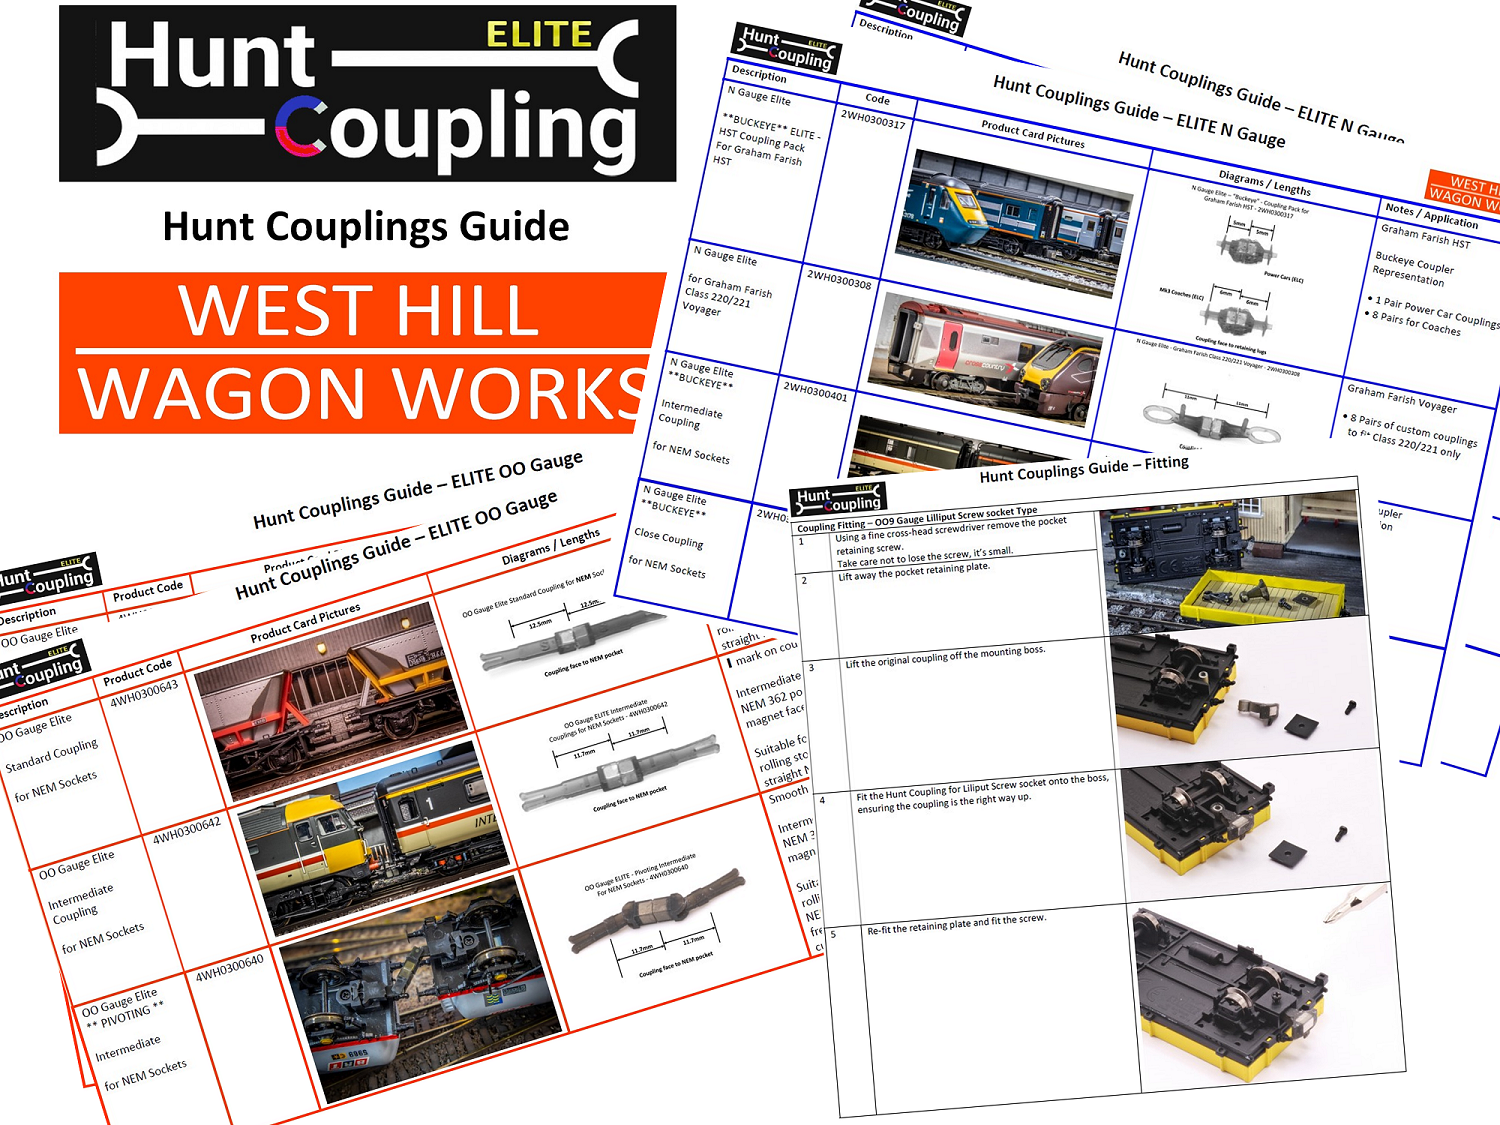 Hunt Couplings Guides